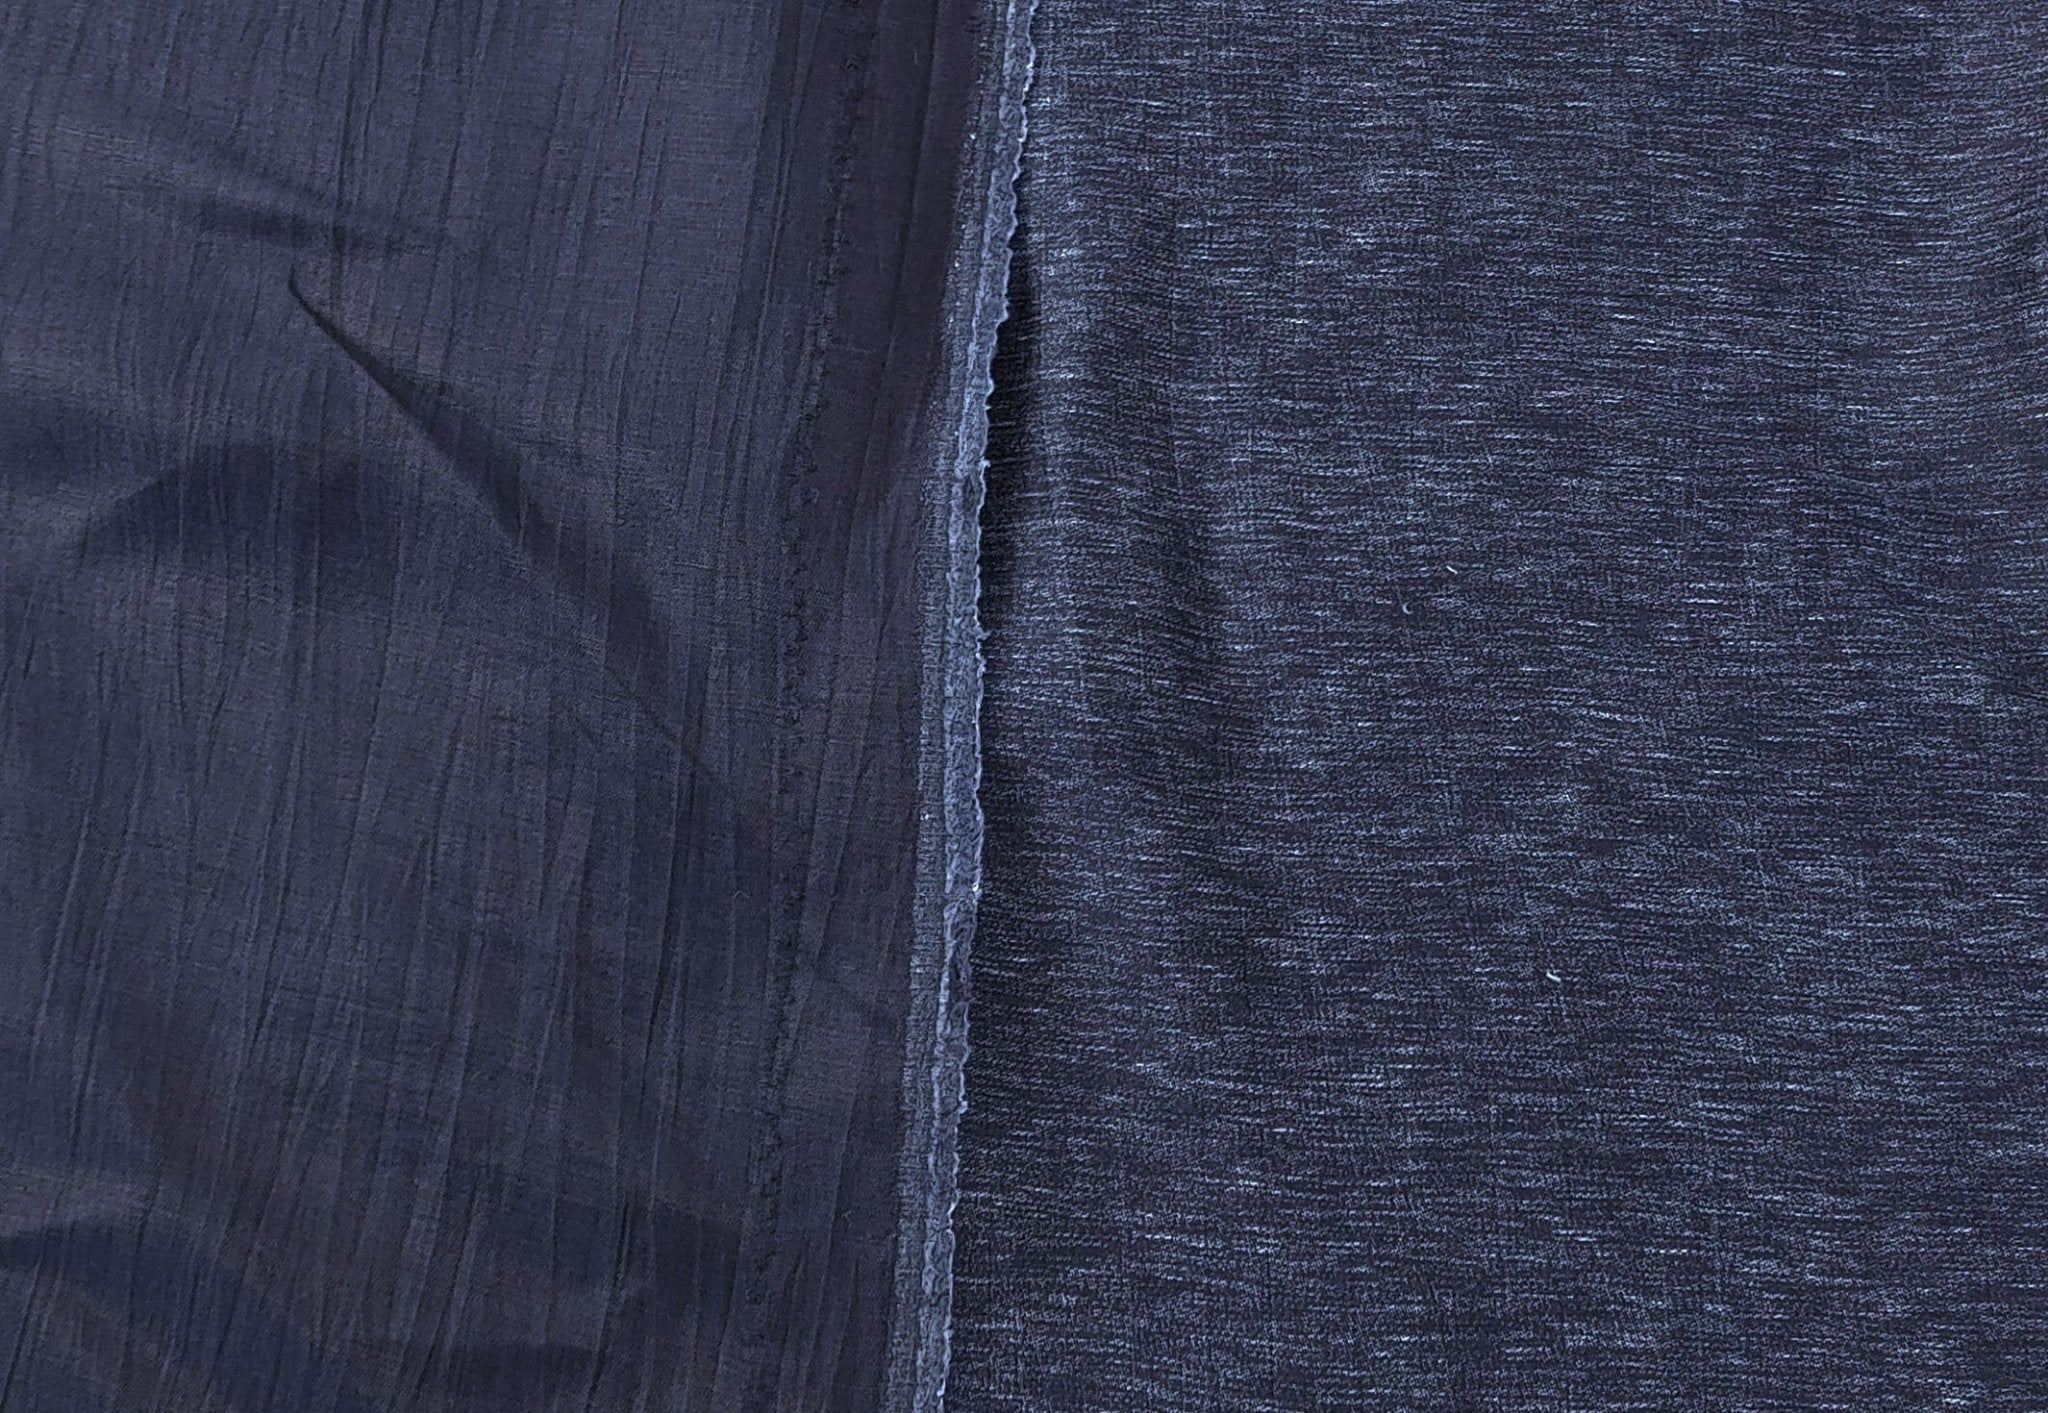 Arctic Nightfall: Linen Nylon Crease Effect Fabric with Subtle White Dot Print 4749 - The Linen Lab - Navy